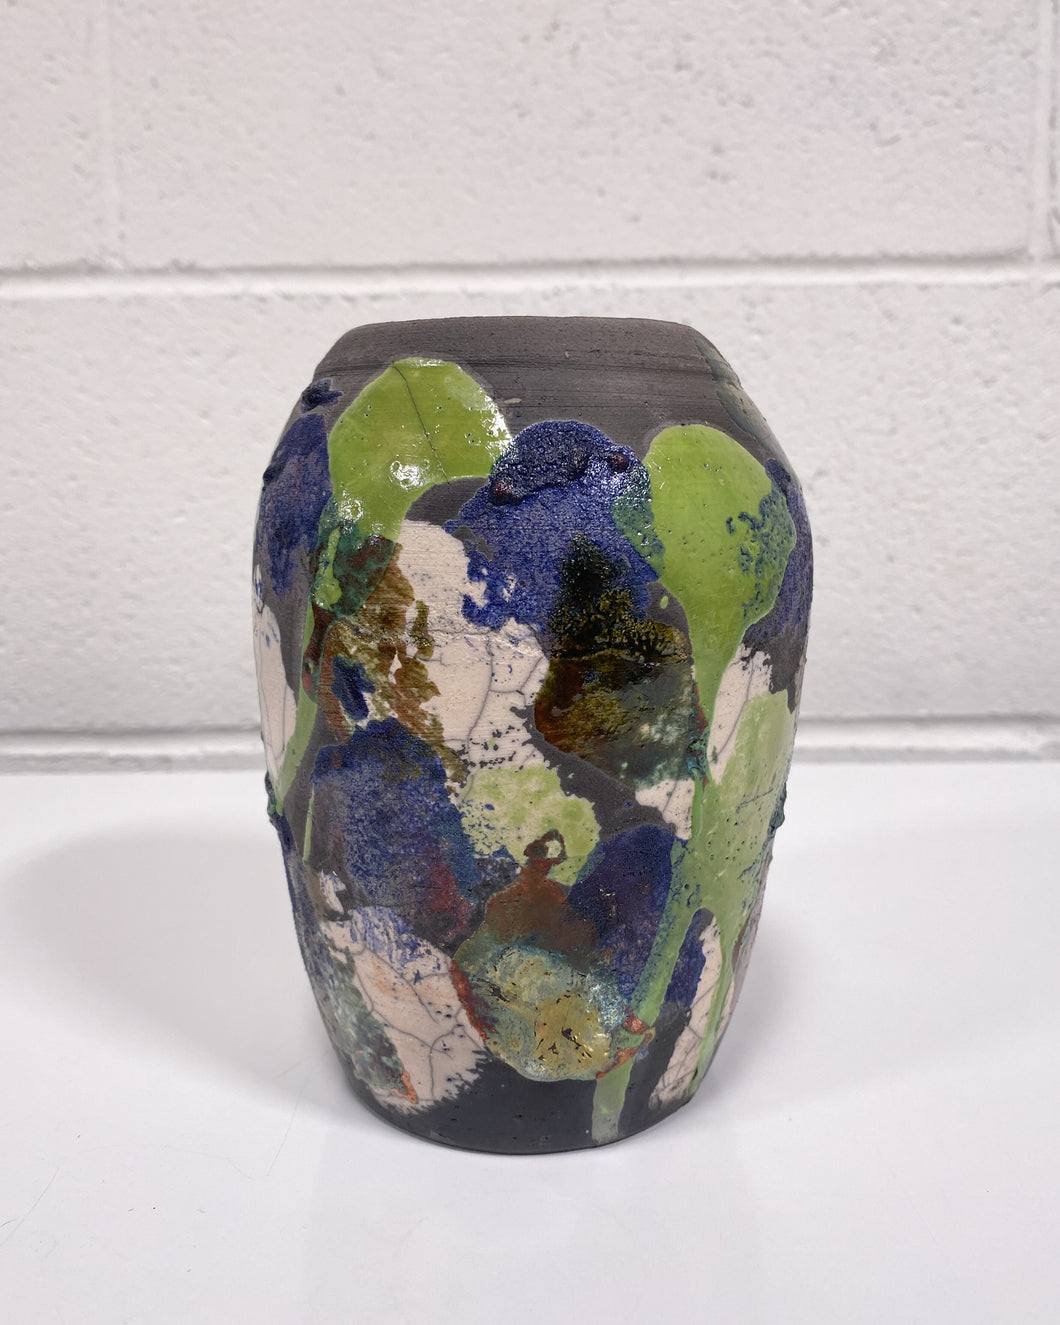 Ceramic Vase with Splotches of Color